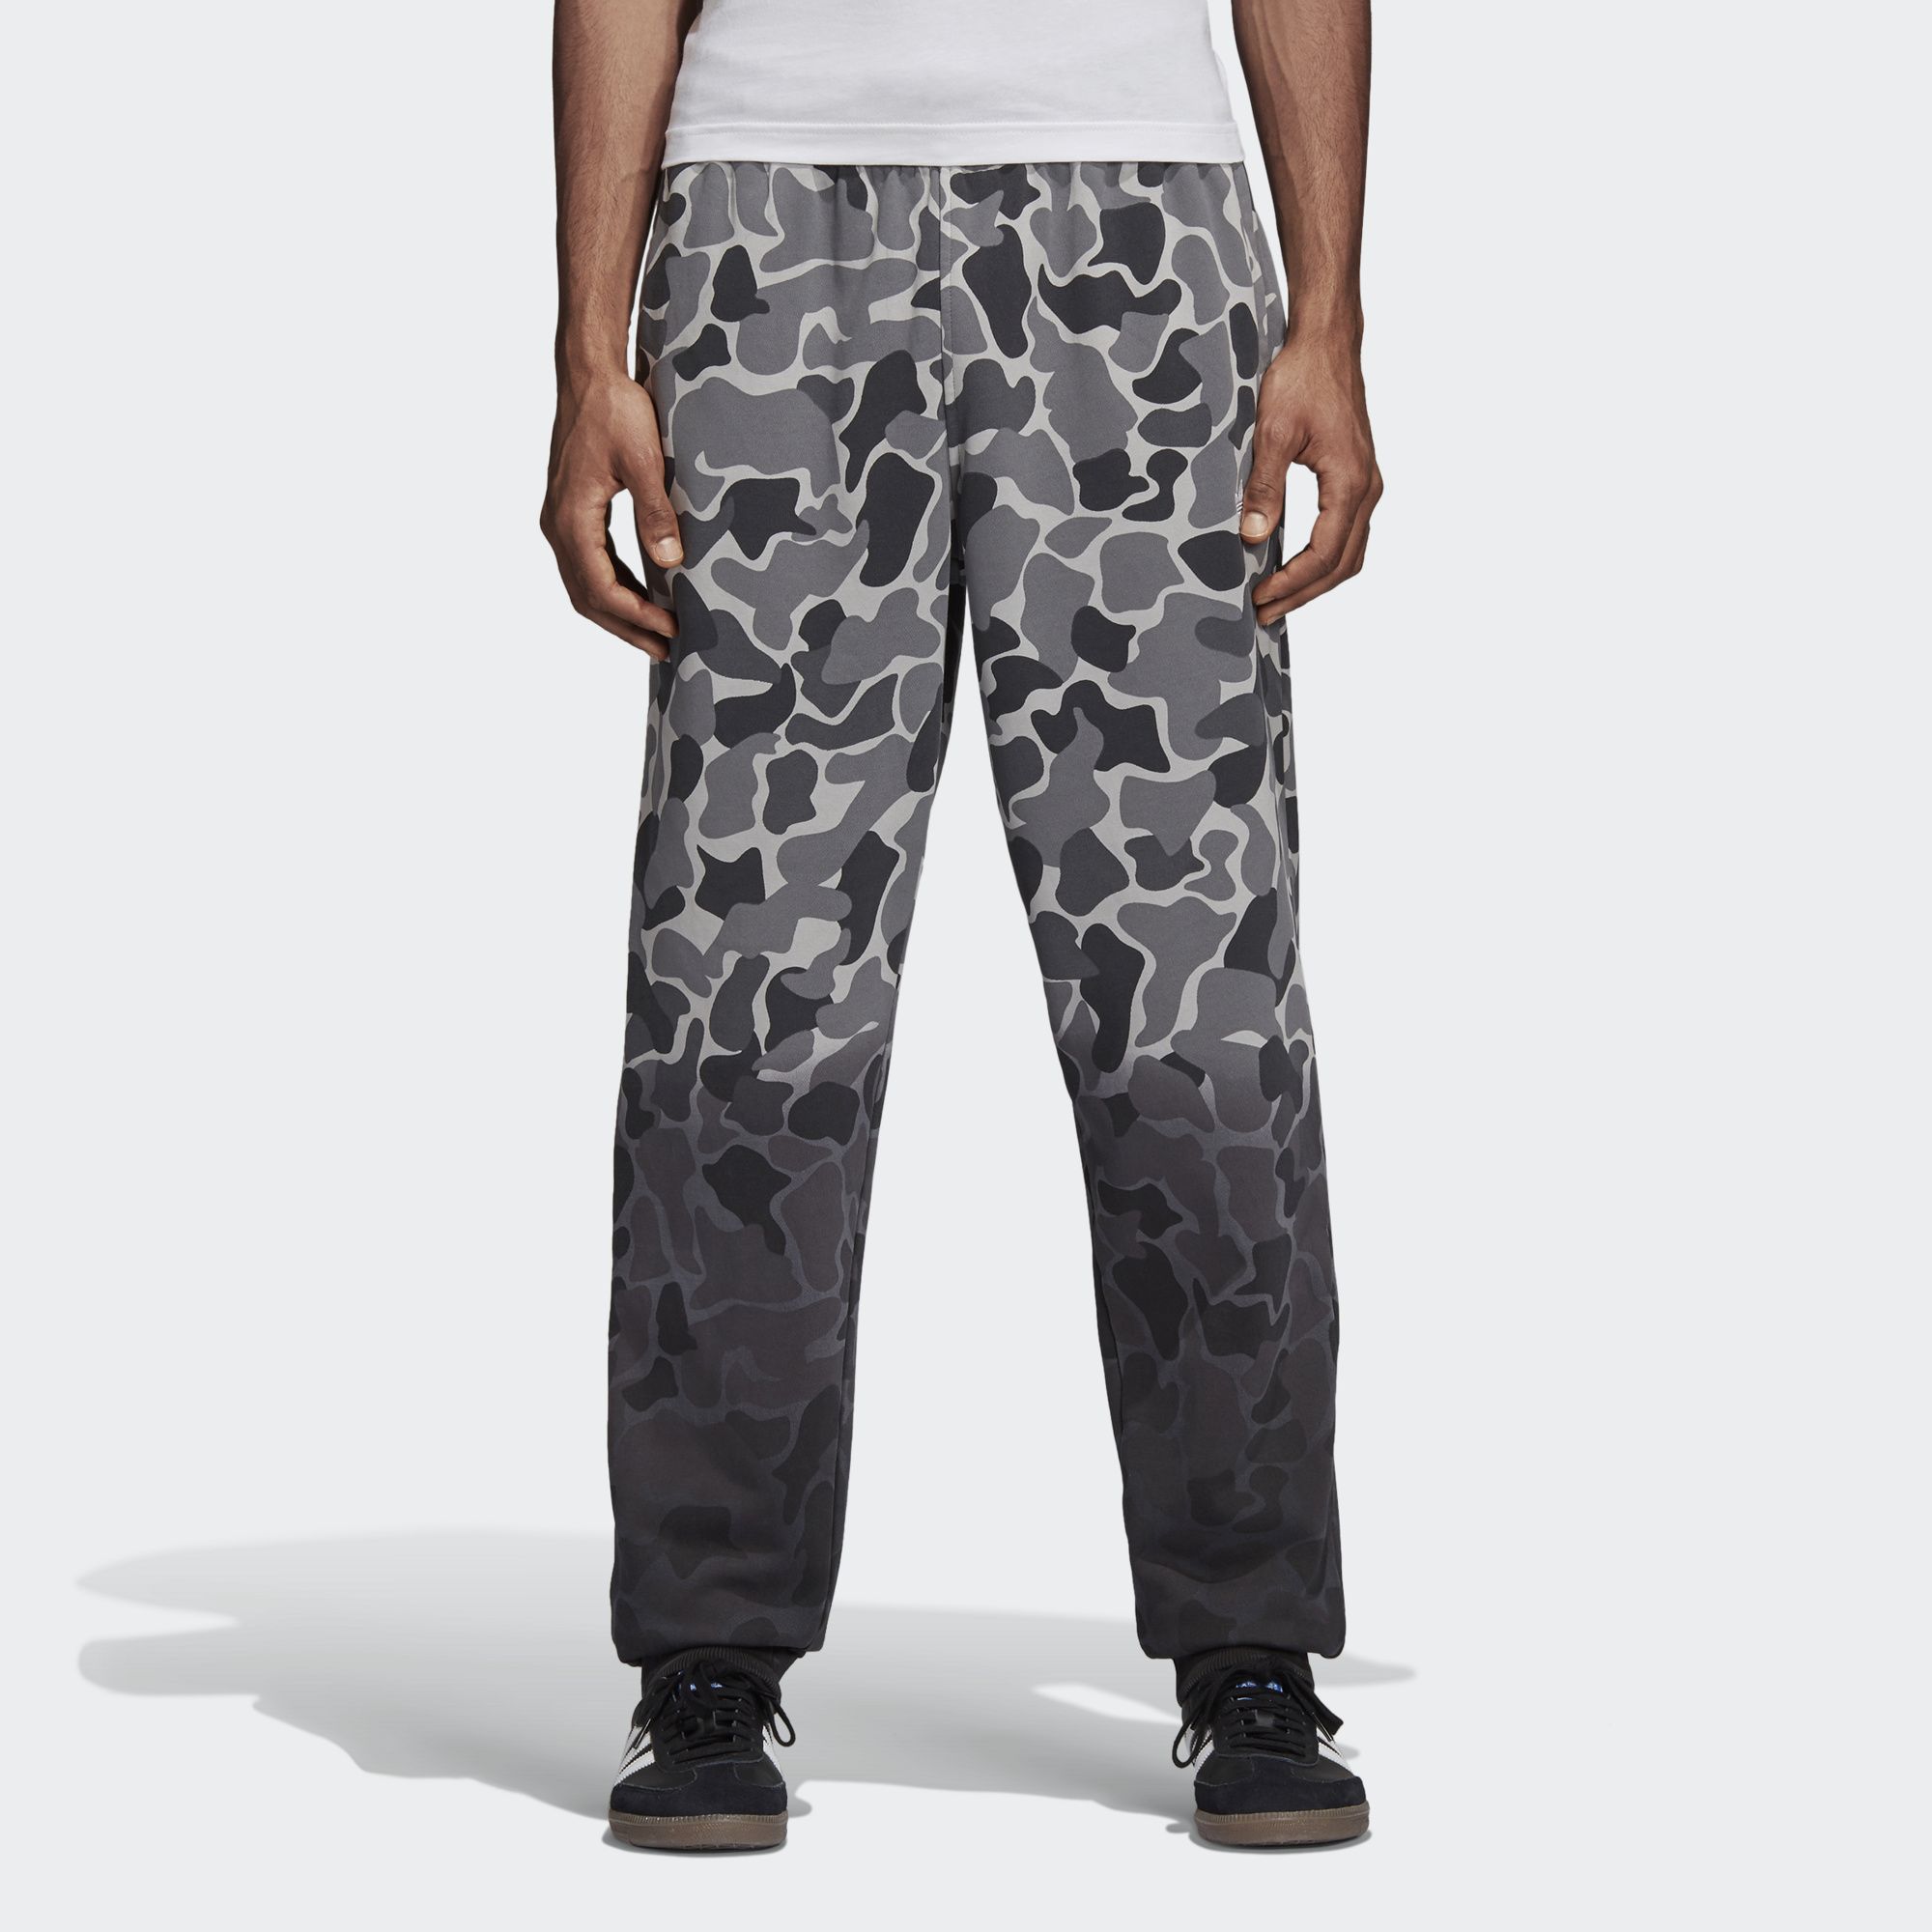 Adidas Men's Originals Camouflage Dip-Dyed Pants Gray Camo-Black dh4808 ...